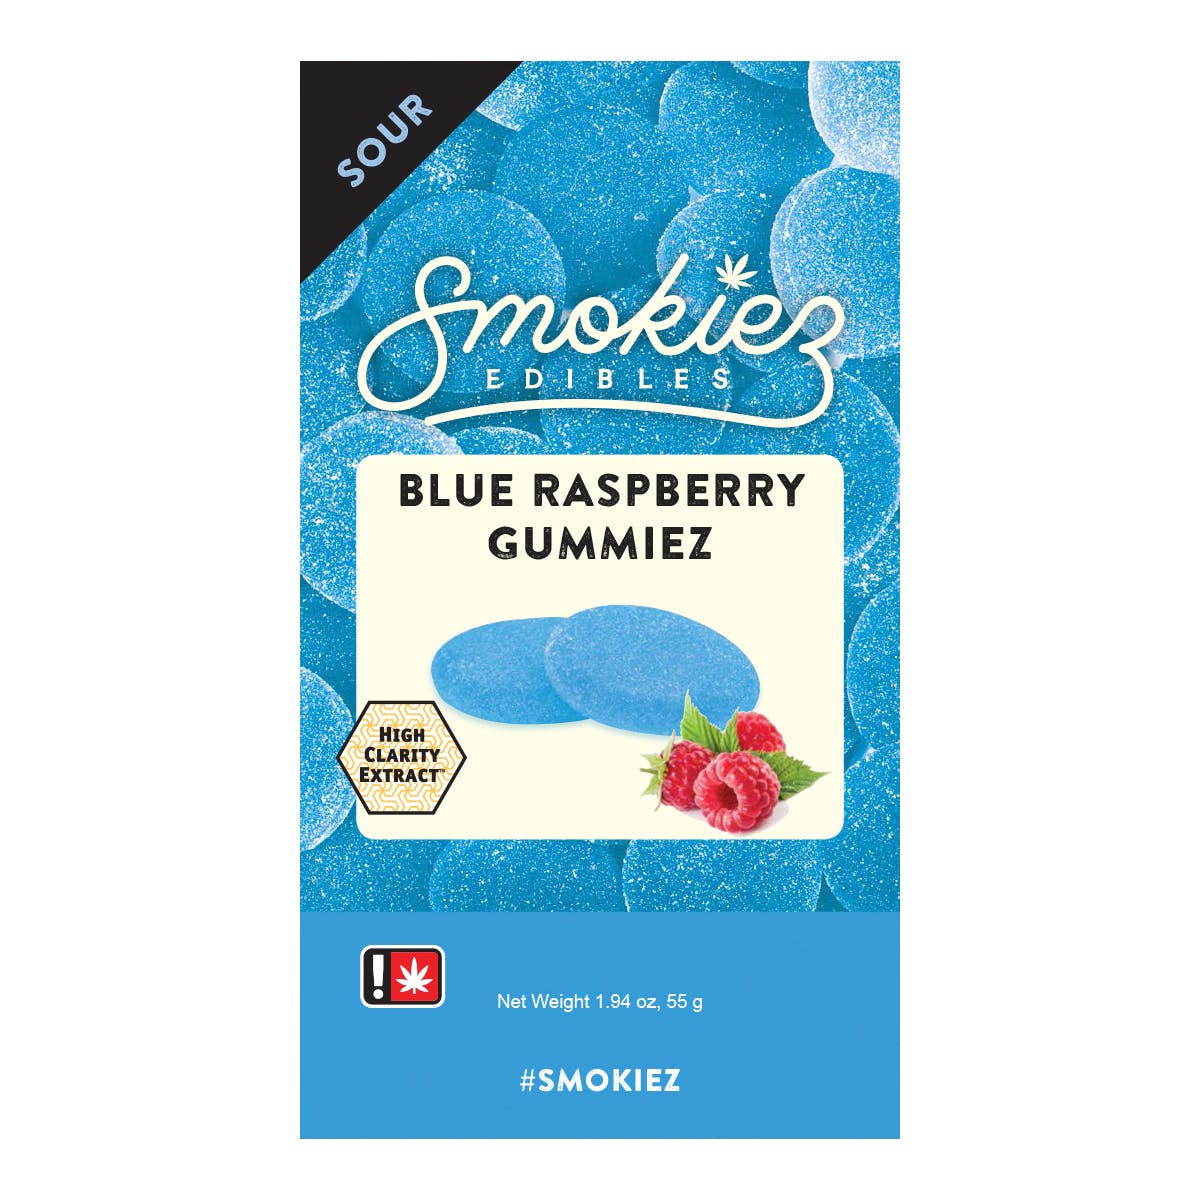 edible-smokiez-edibles-sour-raspberry-gummiez-2c-50-mg